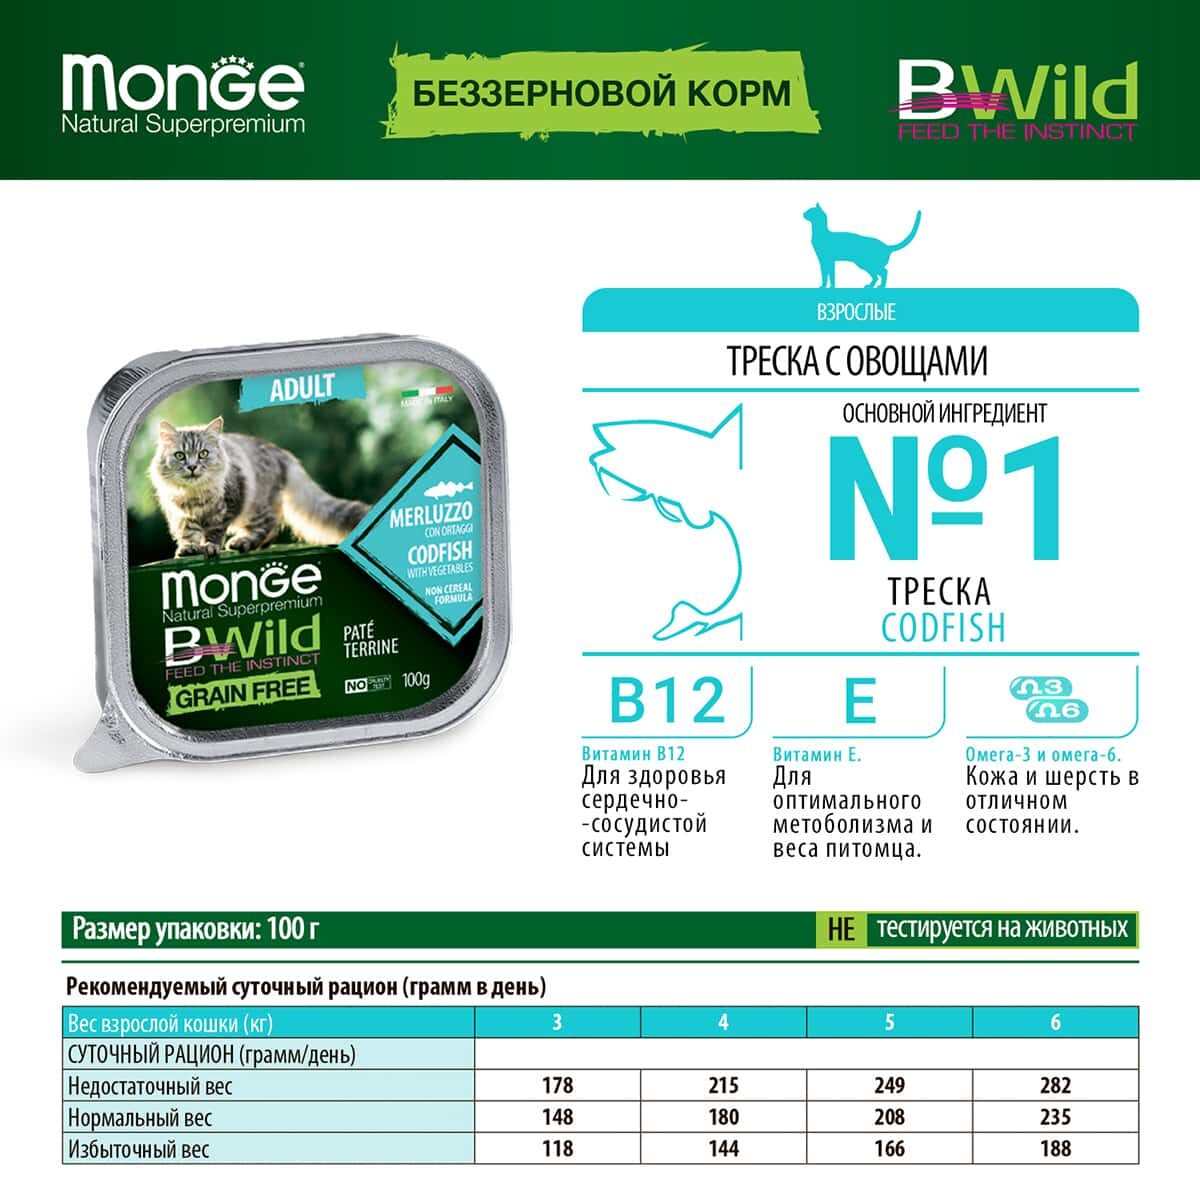 Monge Cat BWild Grain free Adult Codfish with vegetables (100г)